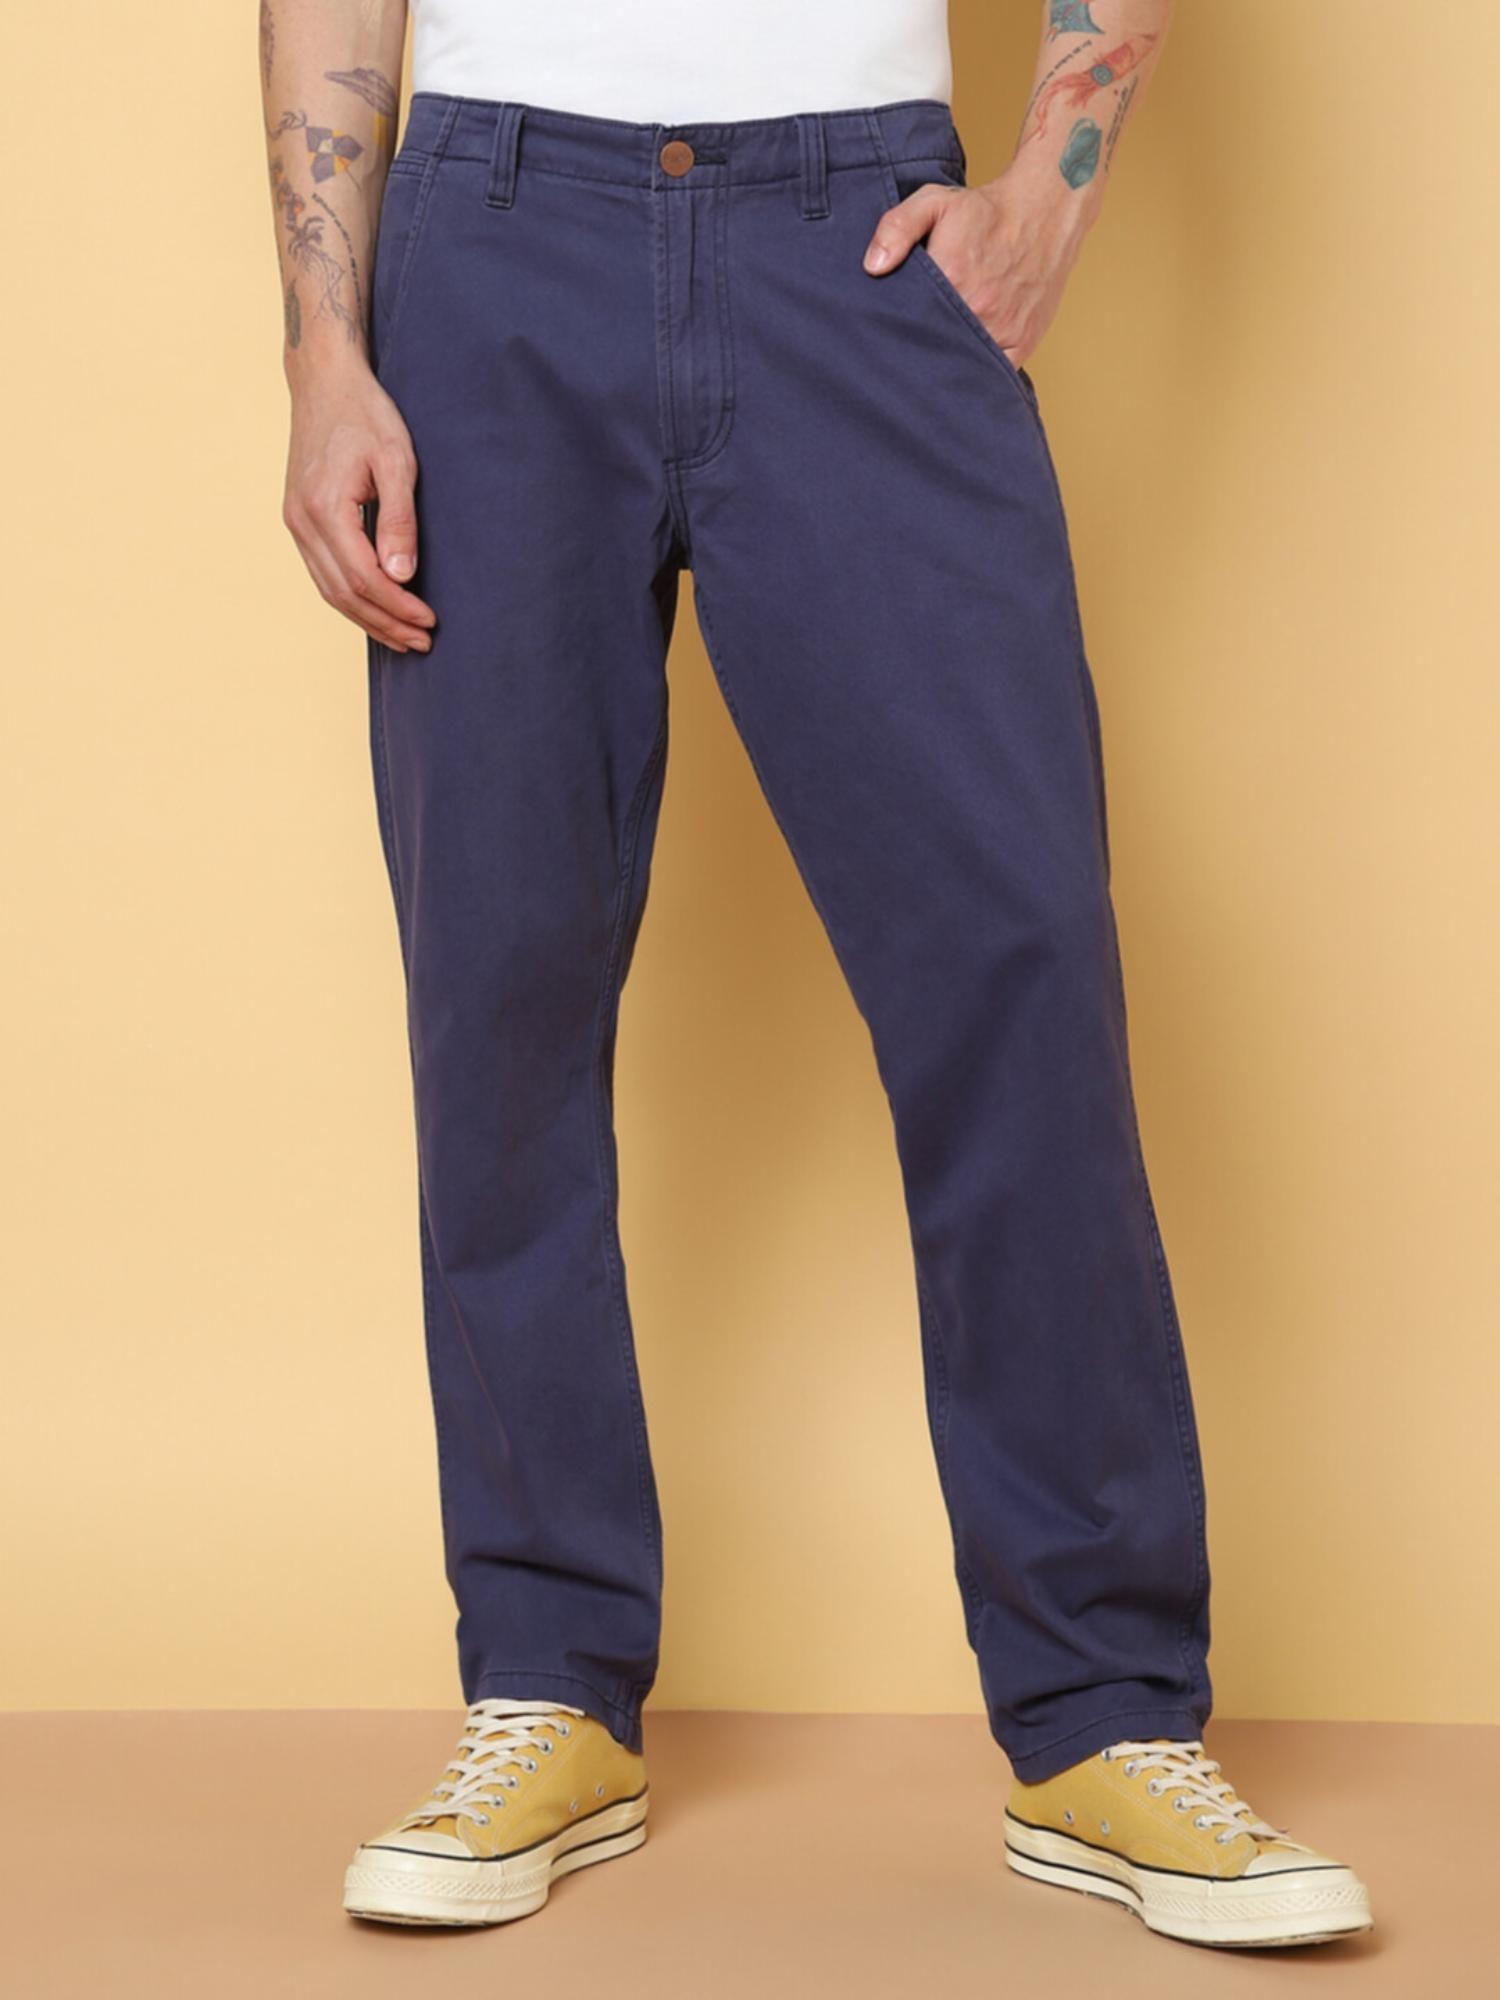 men's modern chino blue trousers